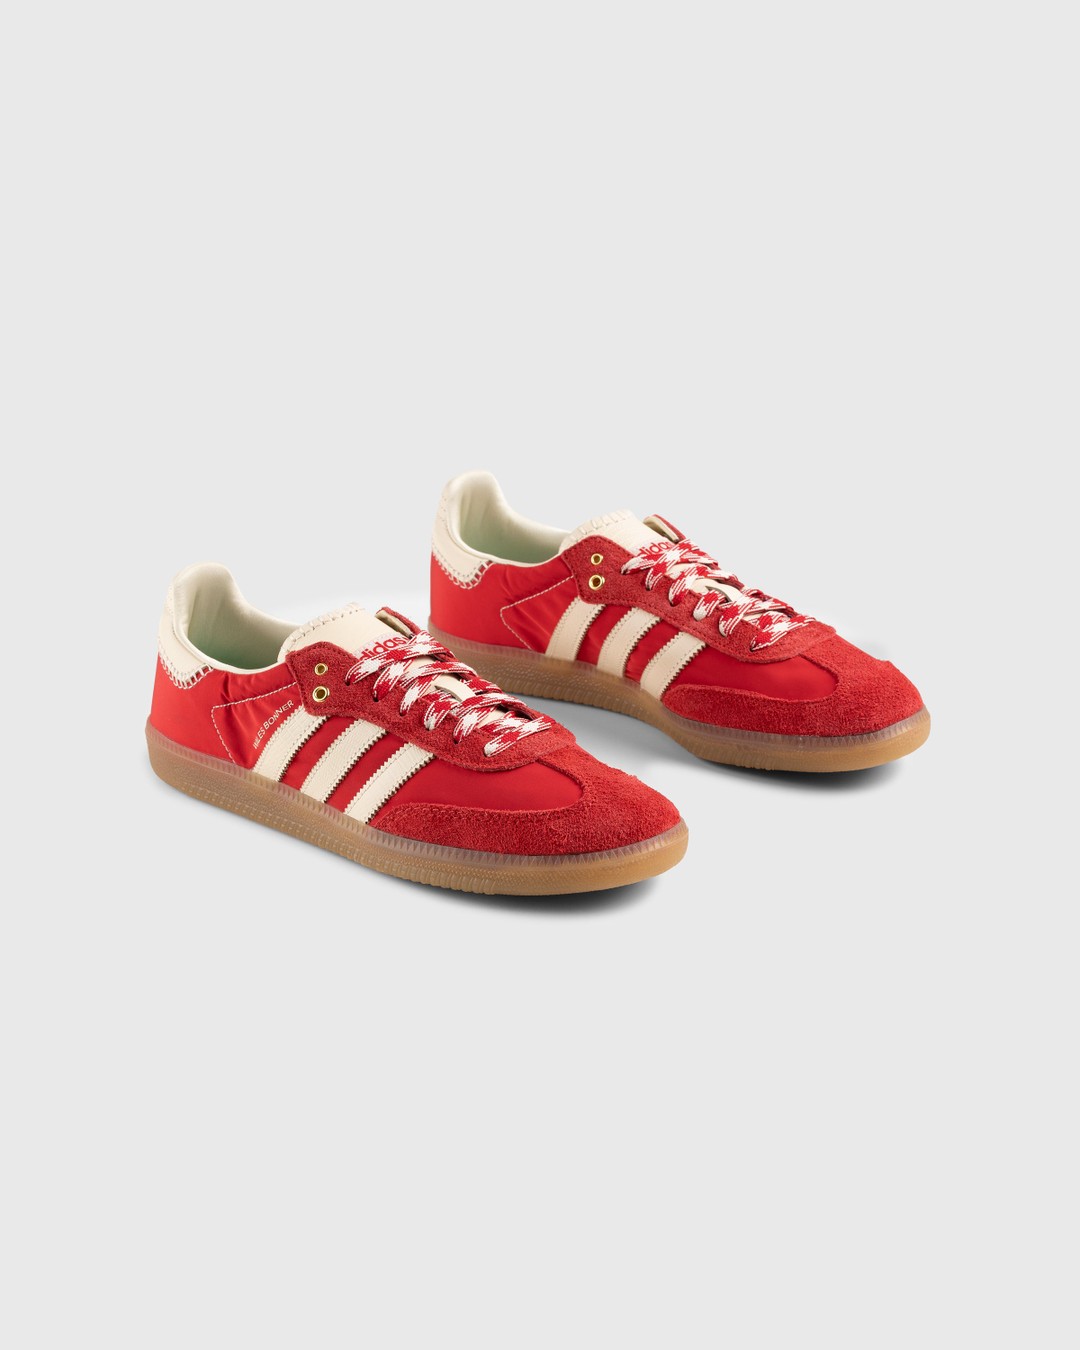 Adidas x Wales Bonner – WB Samba Scarlet/Ecru Tint/Scarlet - Low Top Sneakers - Red - Image 4